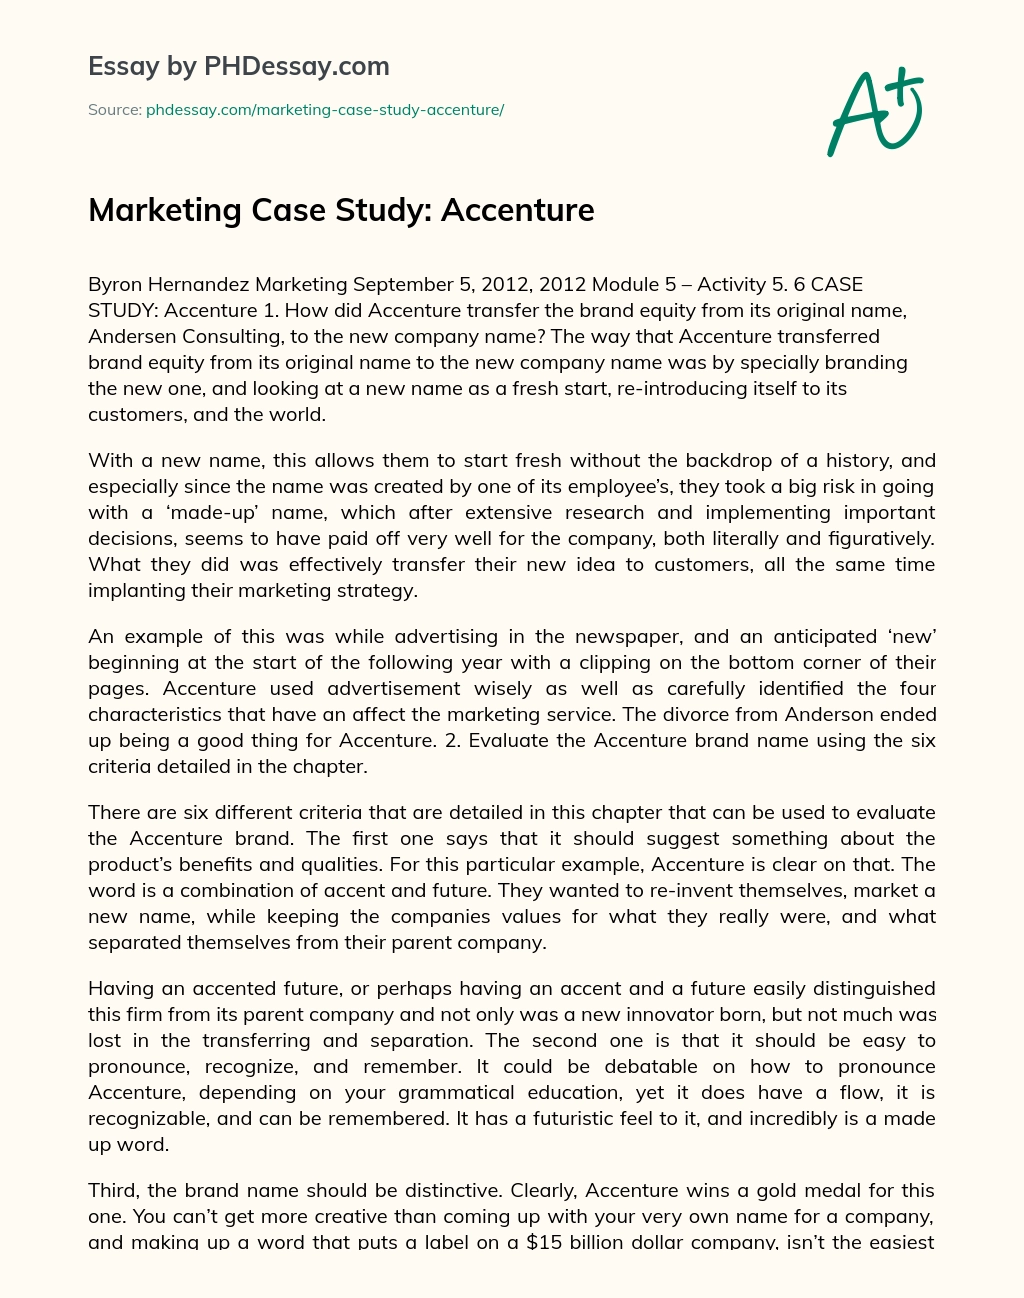 Marketing Case Study: Accenture essay